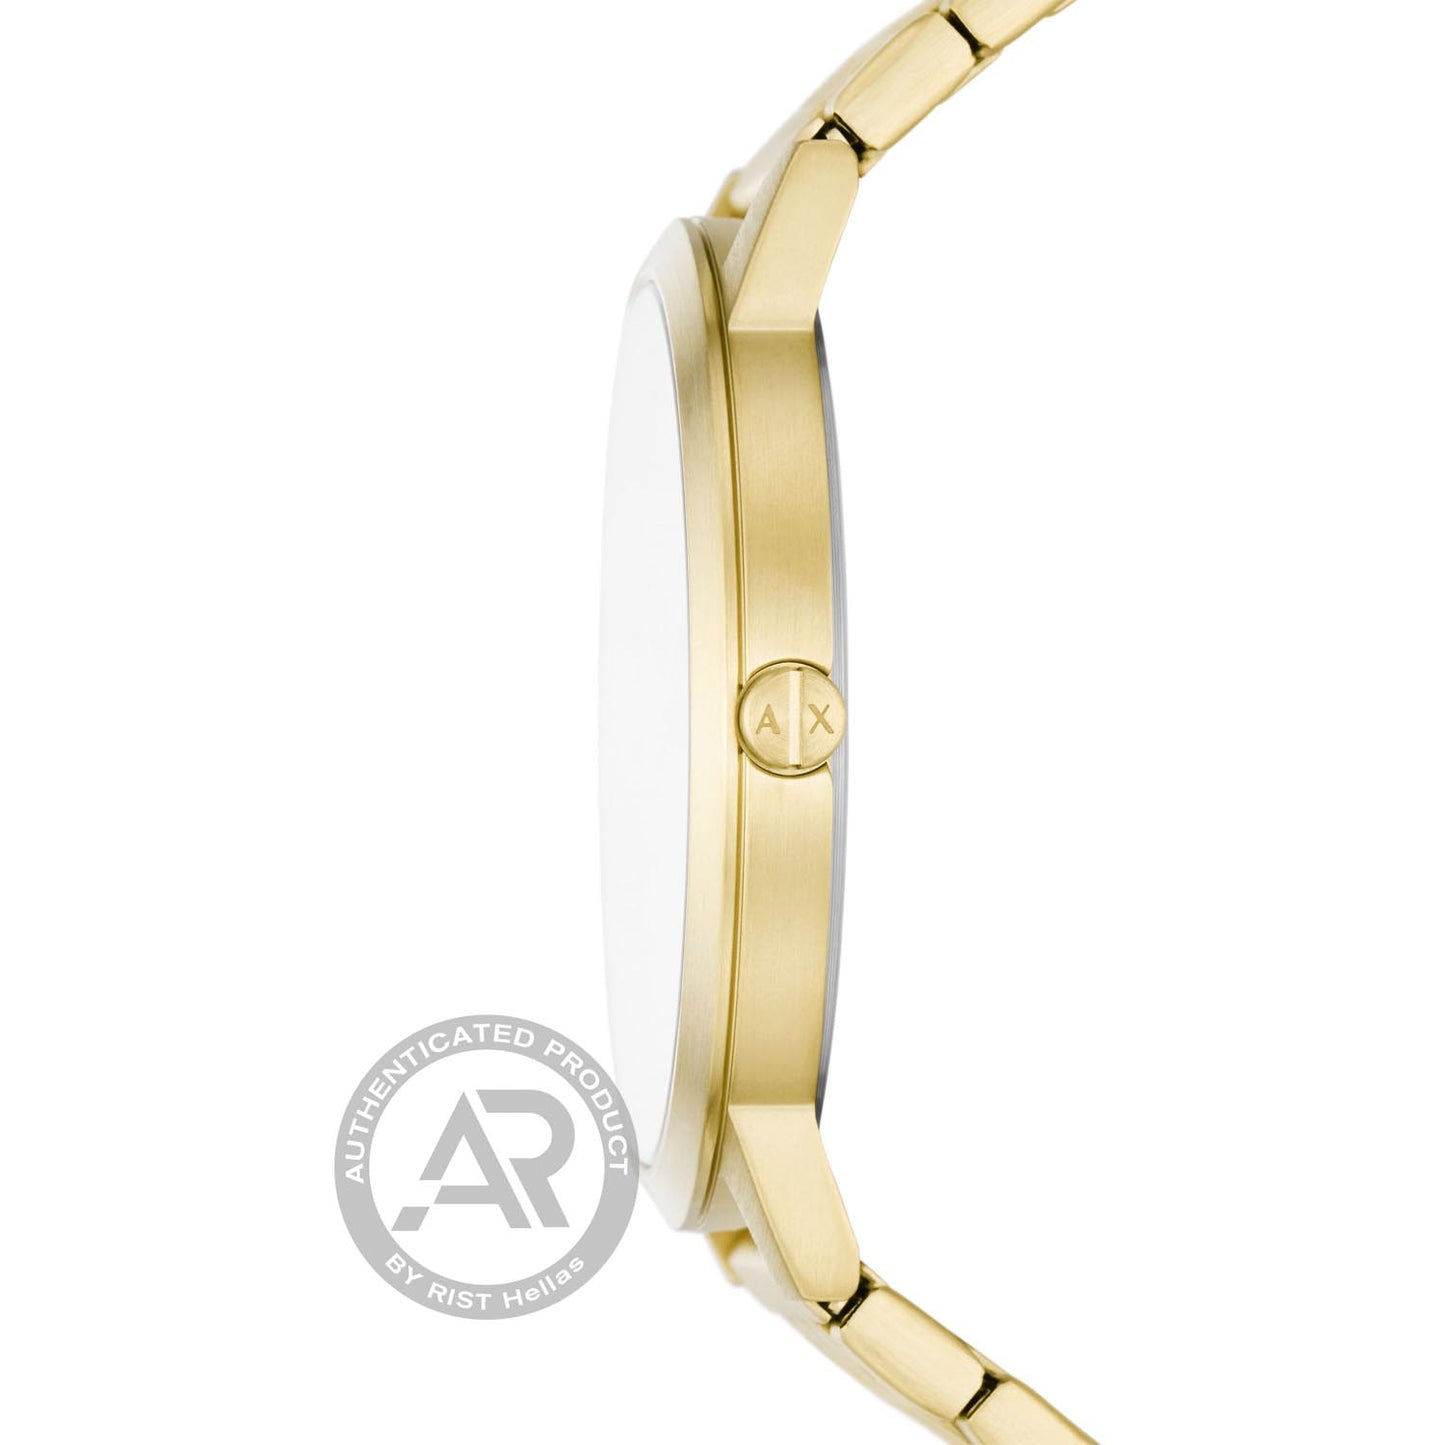 Armani Exchange AX2811 Geraldo Gray Stainless Steel Bracelet